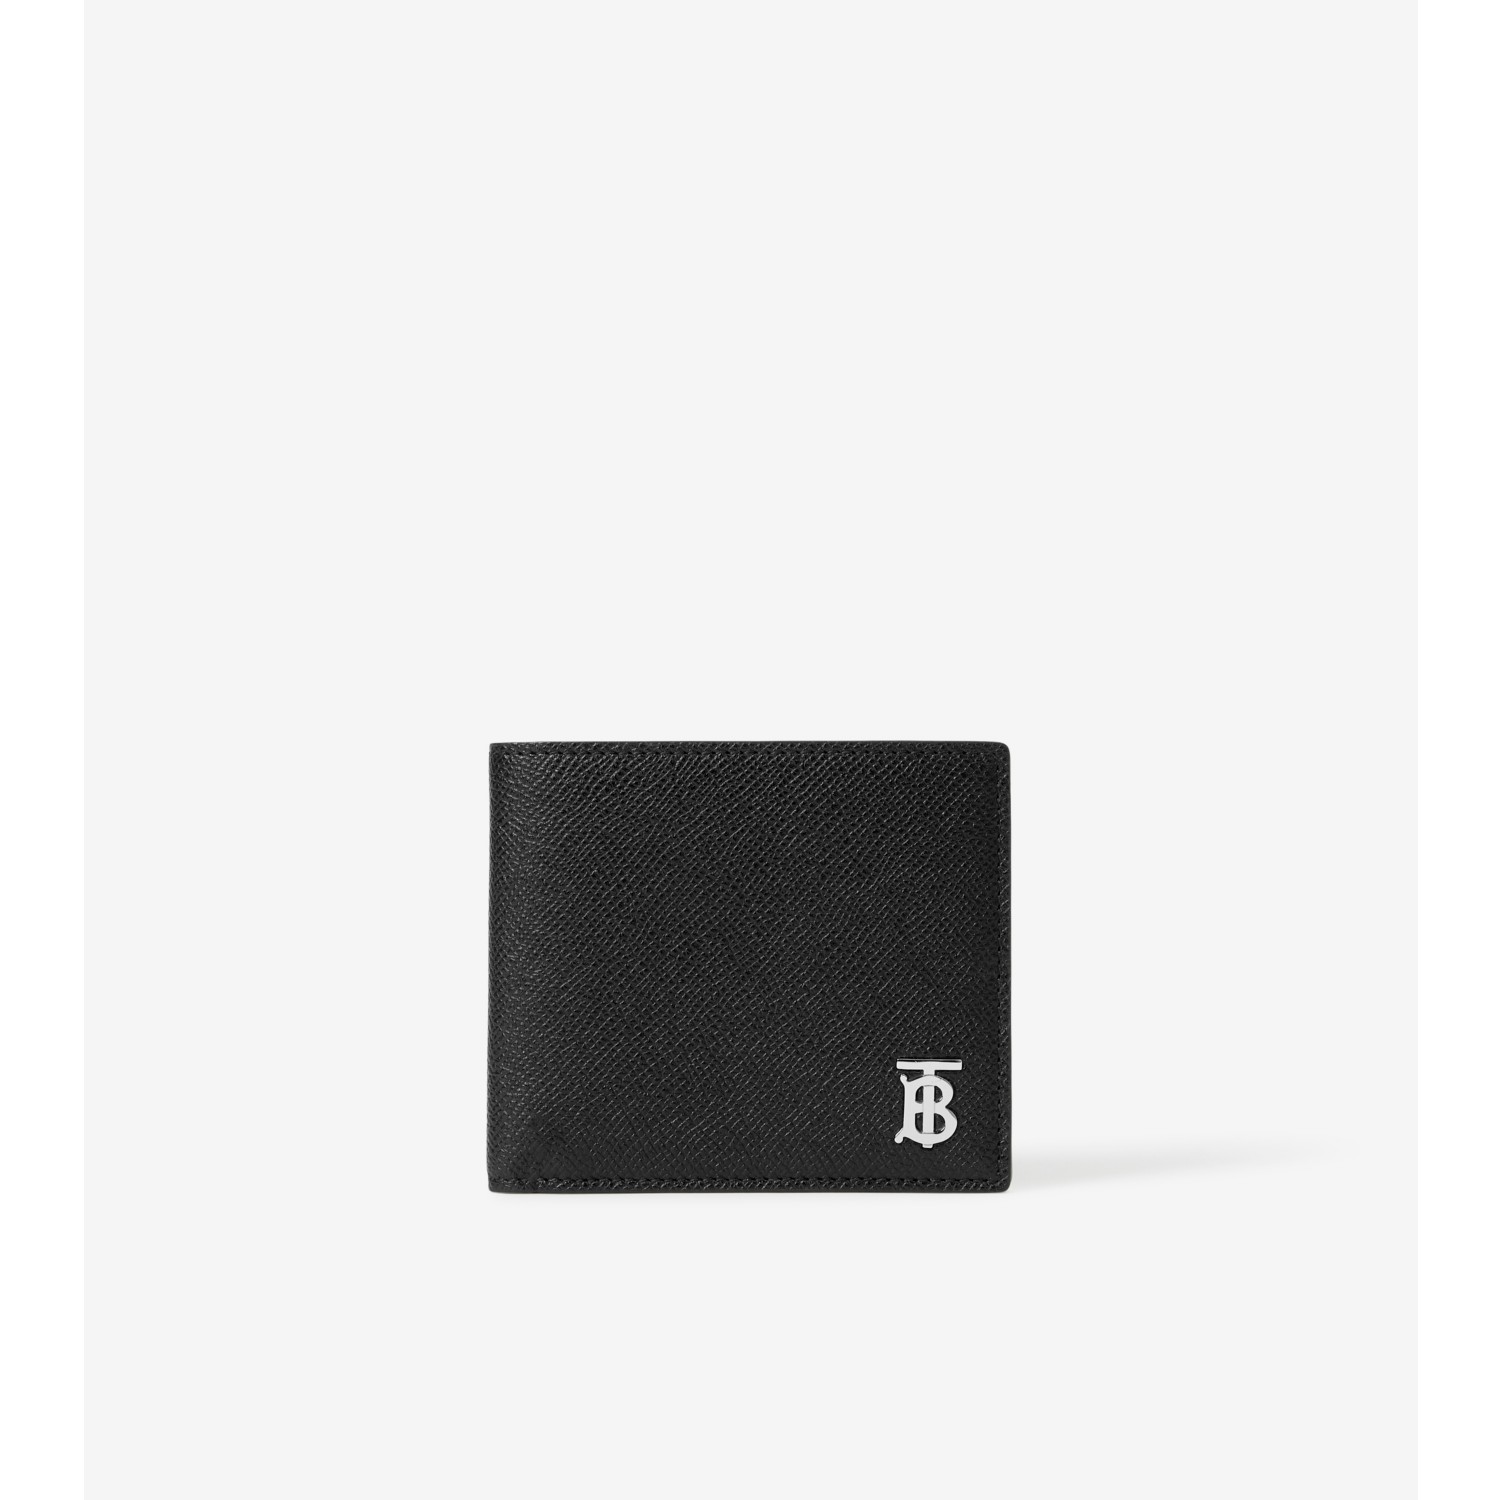 Burberry Black TB Wallet